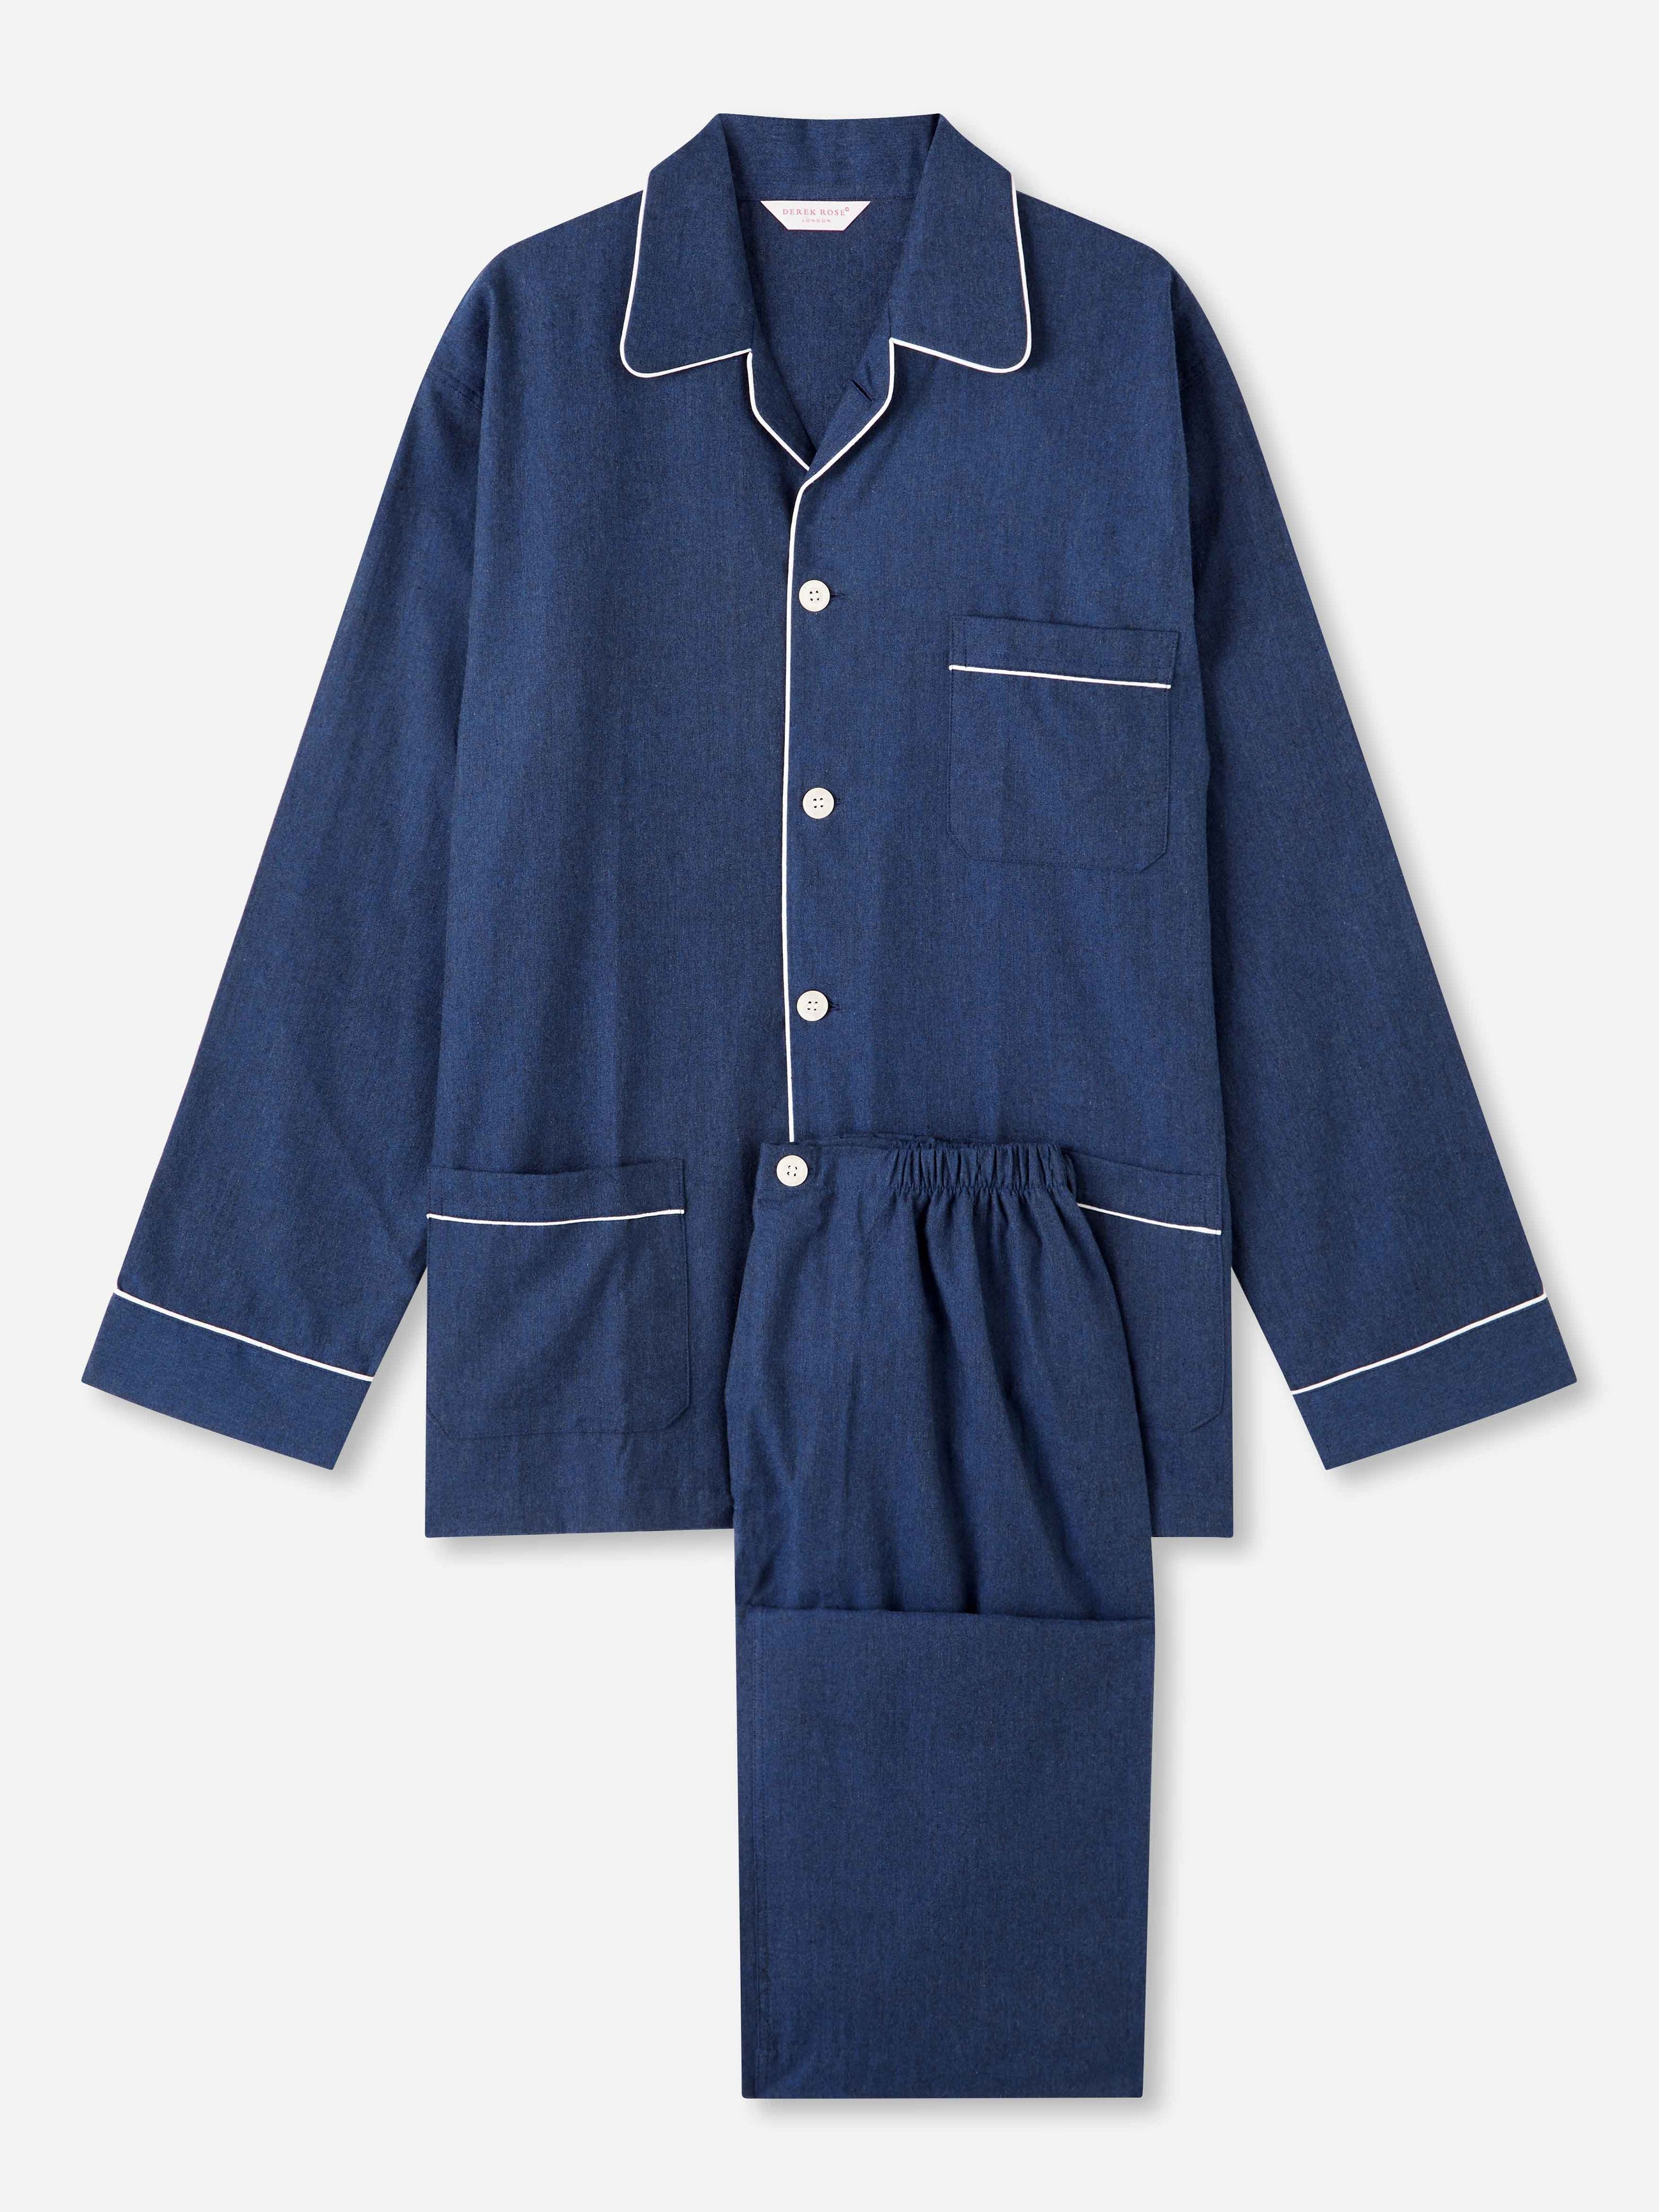 Men's Classic Fit Pyjamas Balmoral 3 Brushed Cotton Navy